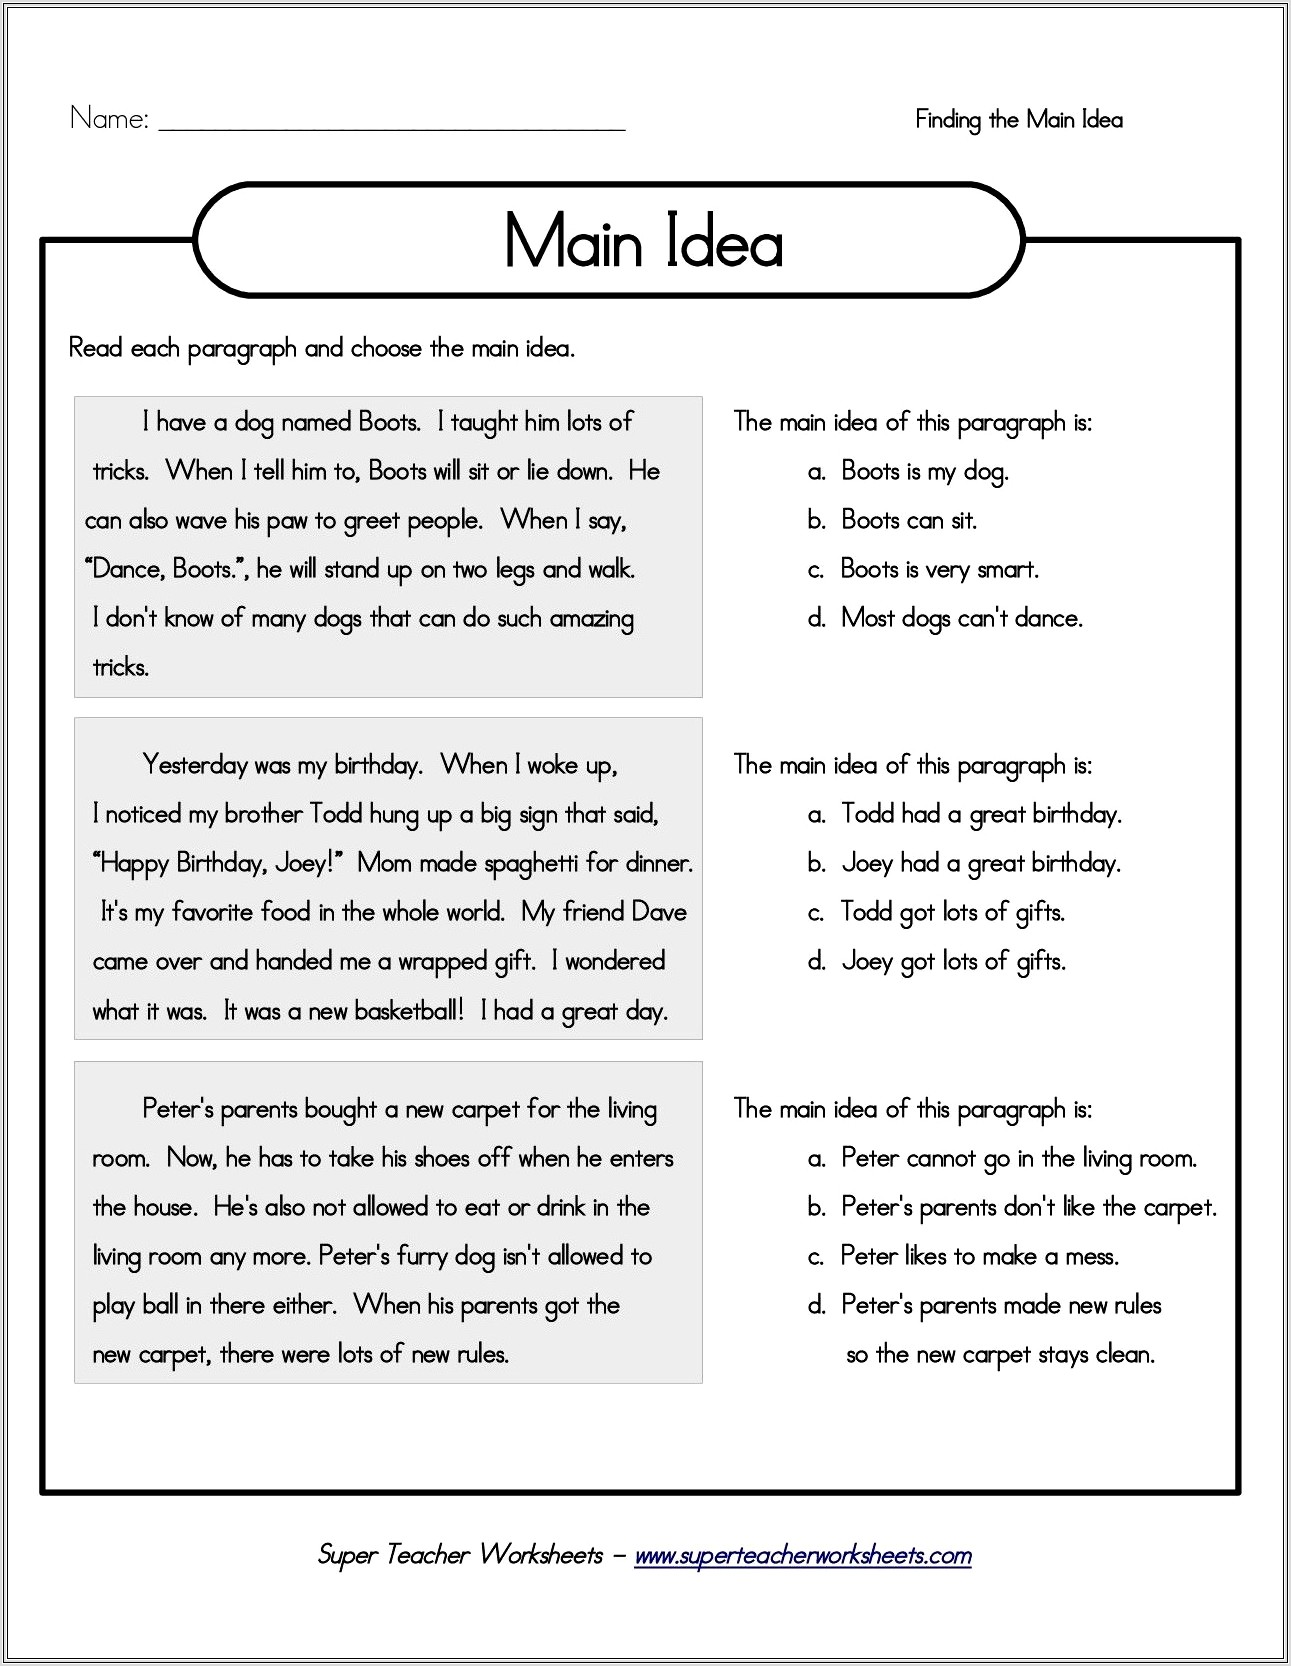 Martin Luther King Jr Main Idea Worksheet